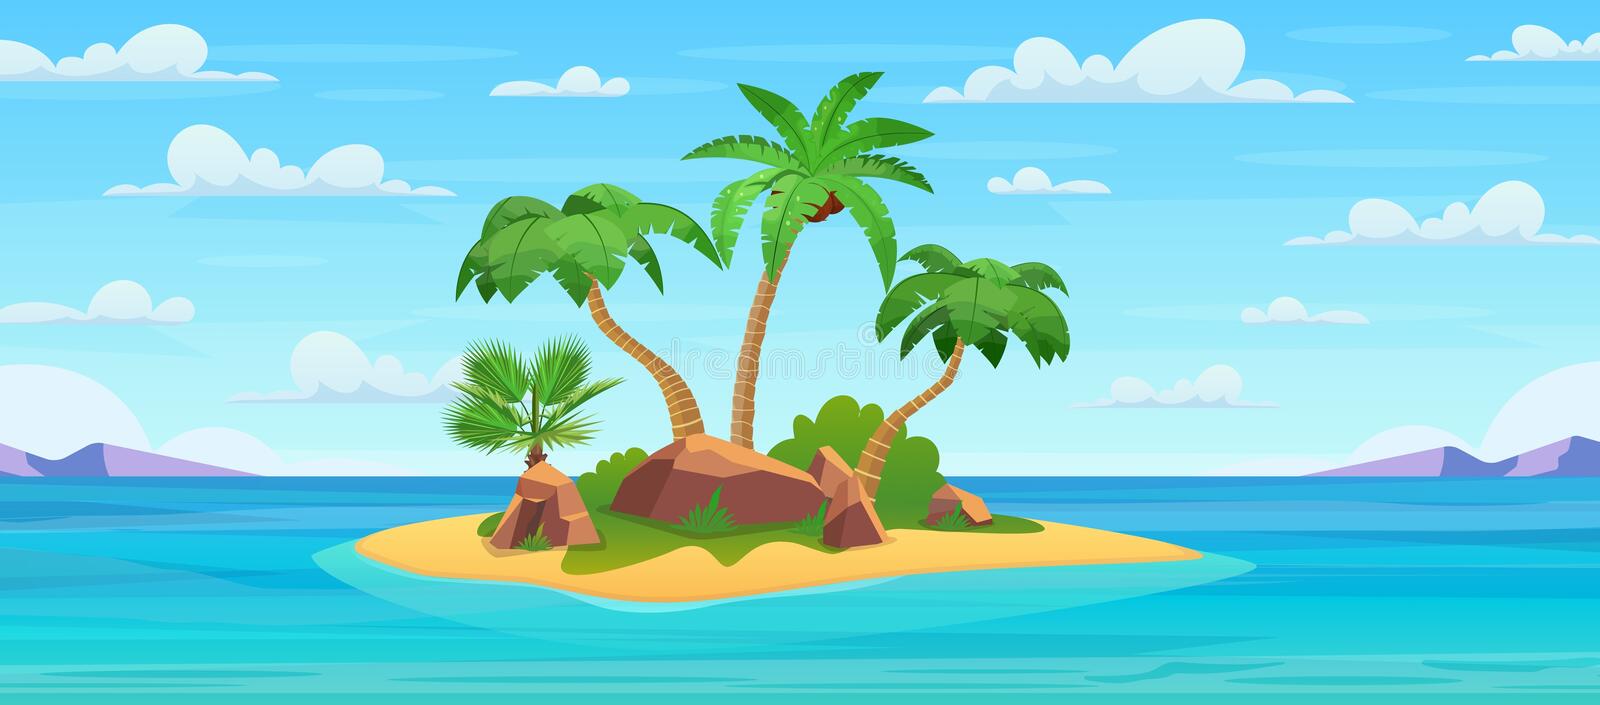 Download Free 100 + cartoon island